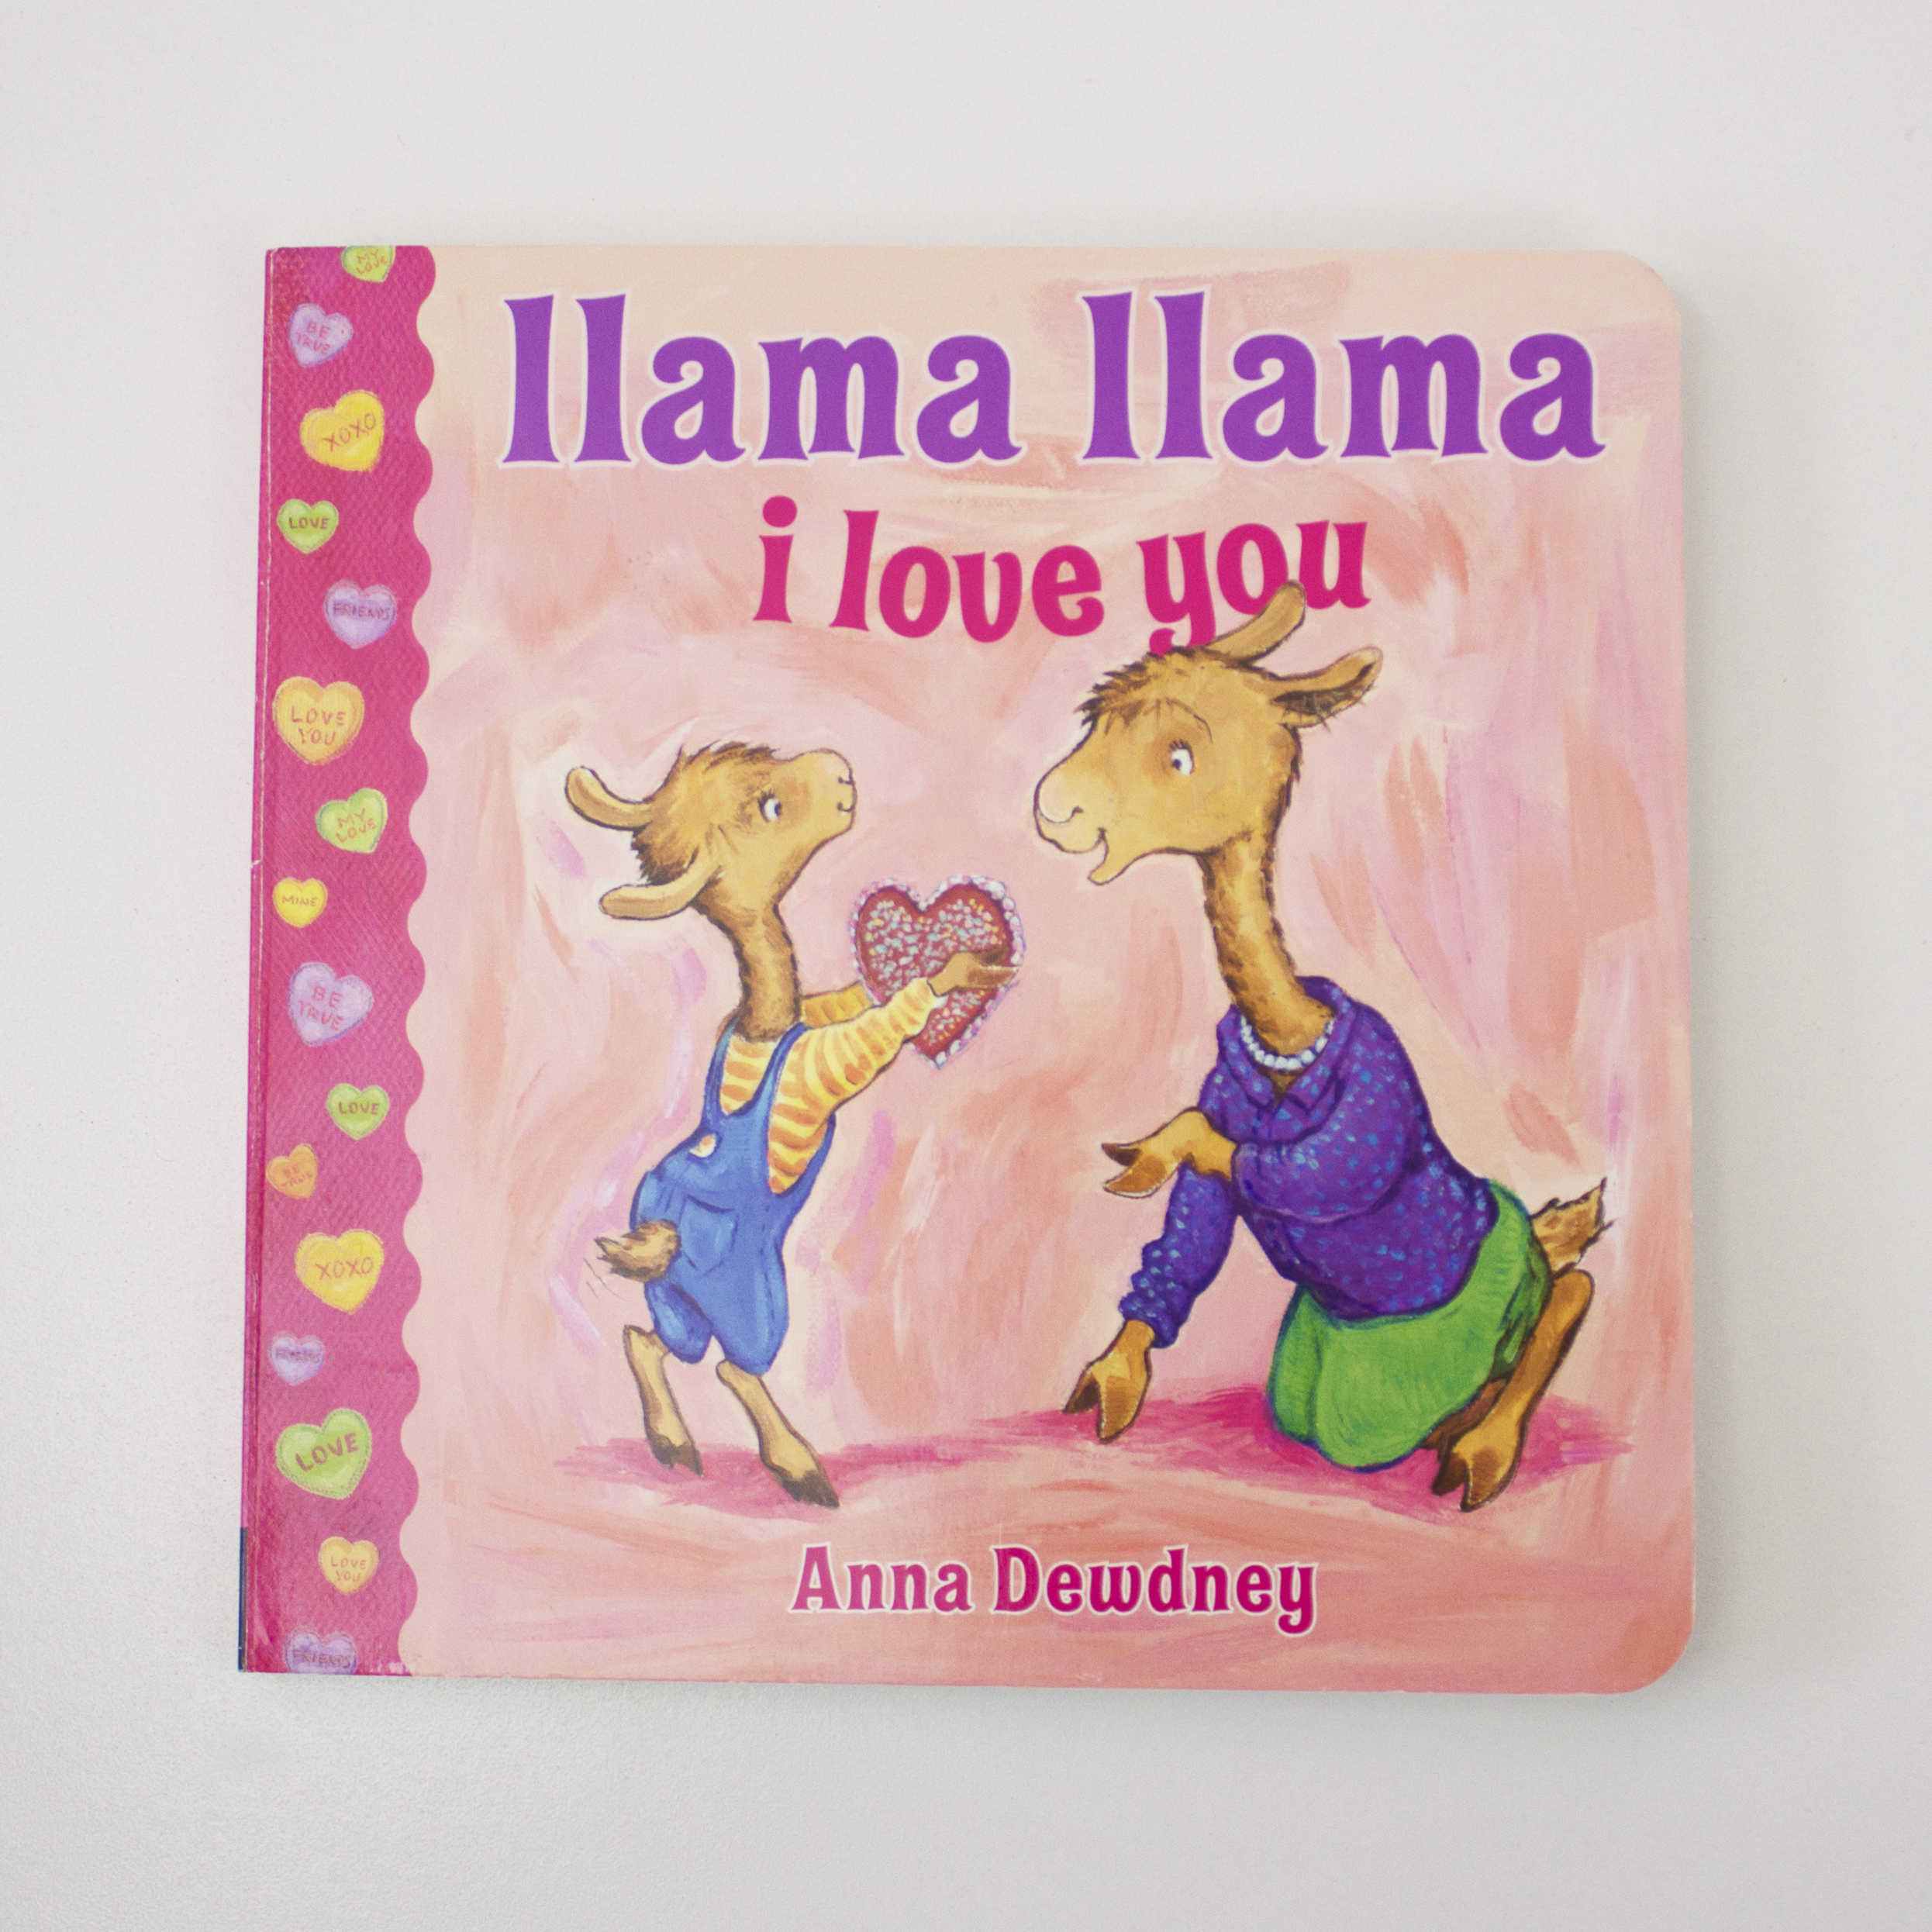 llama llama i love you book cover